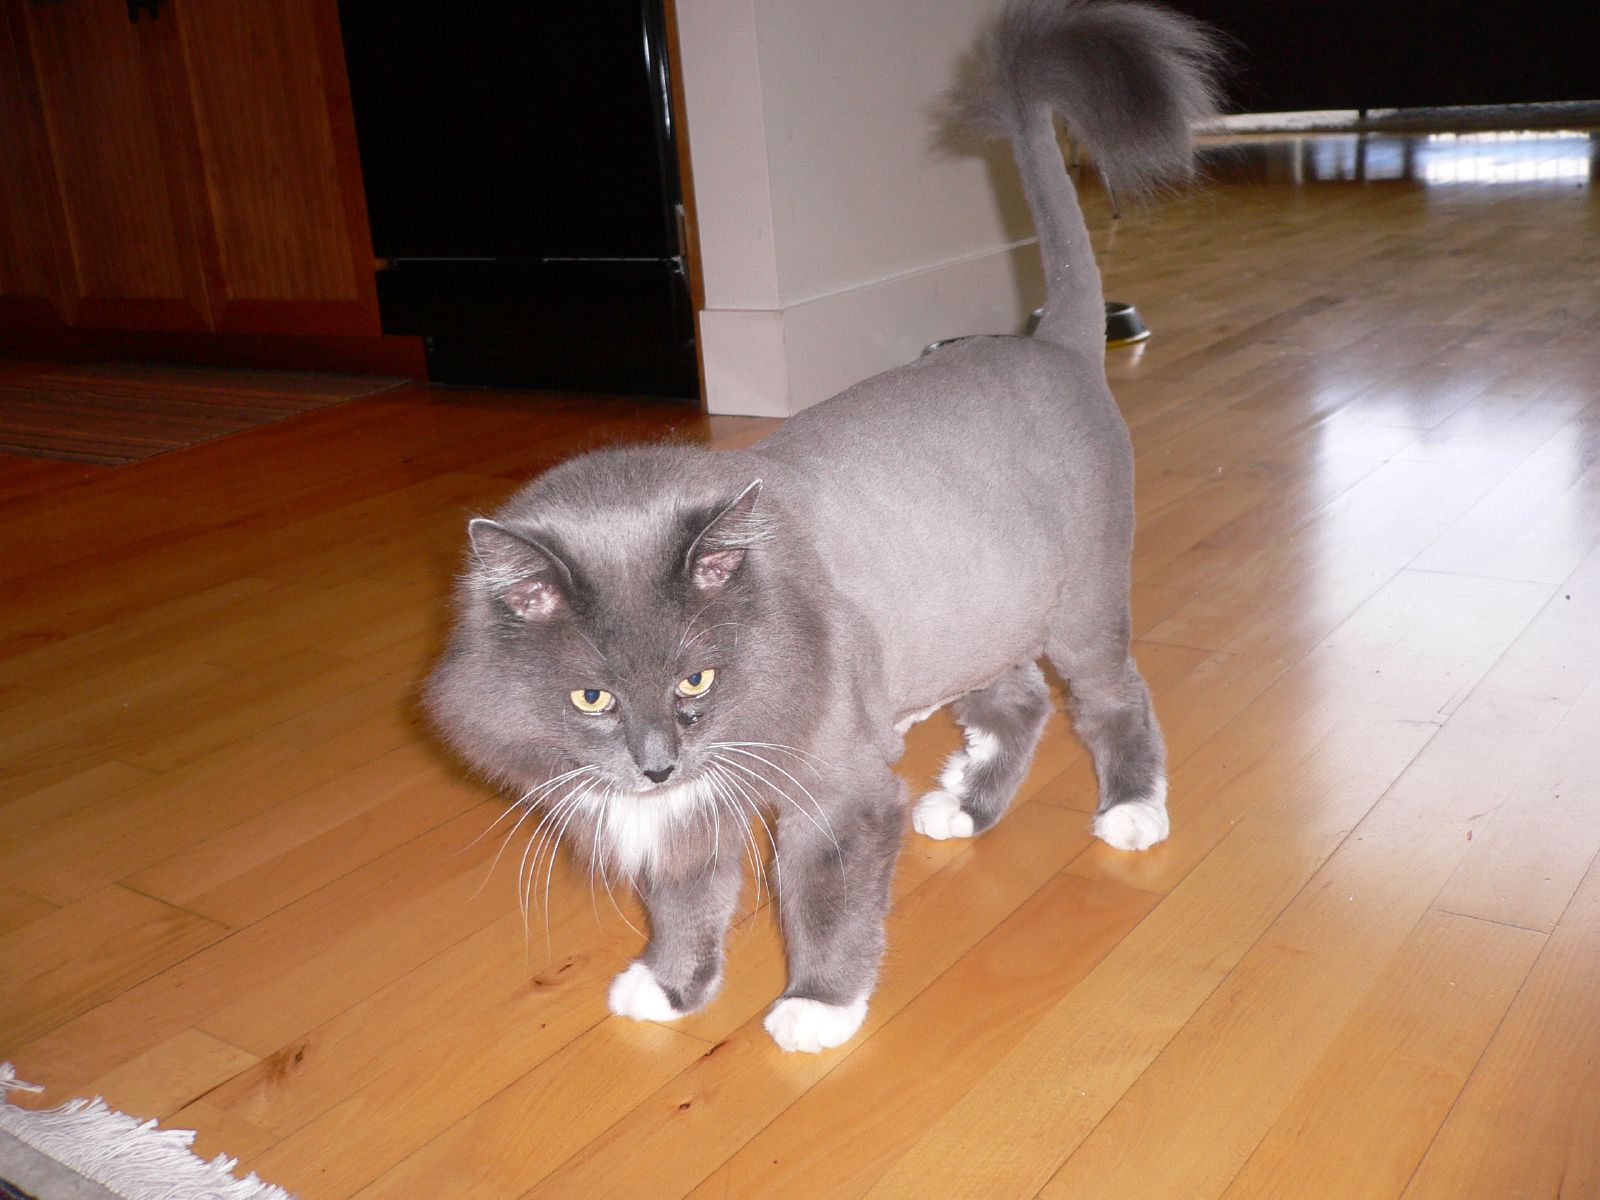 a grey cat standing on top of a wooden floor